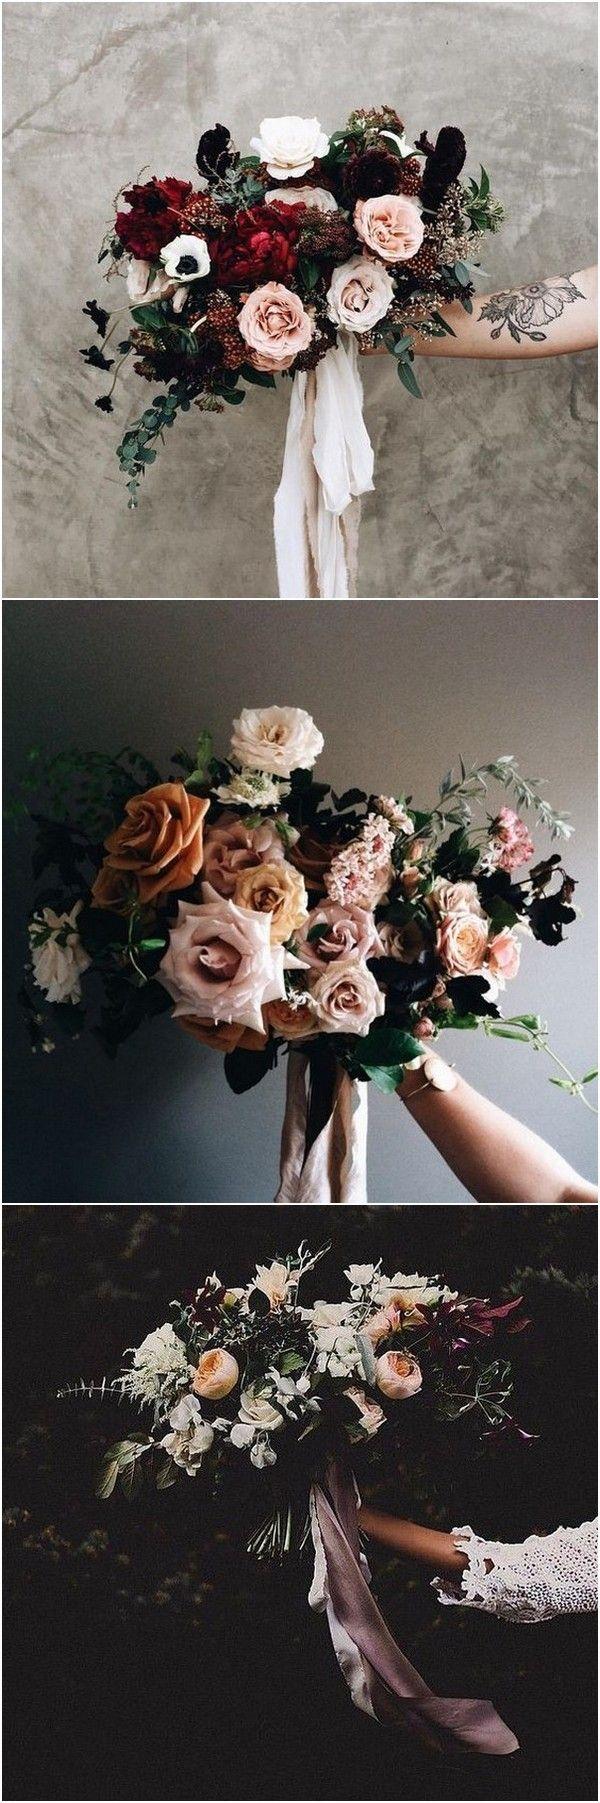 زفاف - Top 25 Moody Wedding Bouquets For 2018 Trends